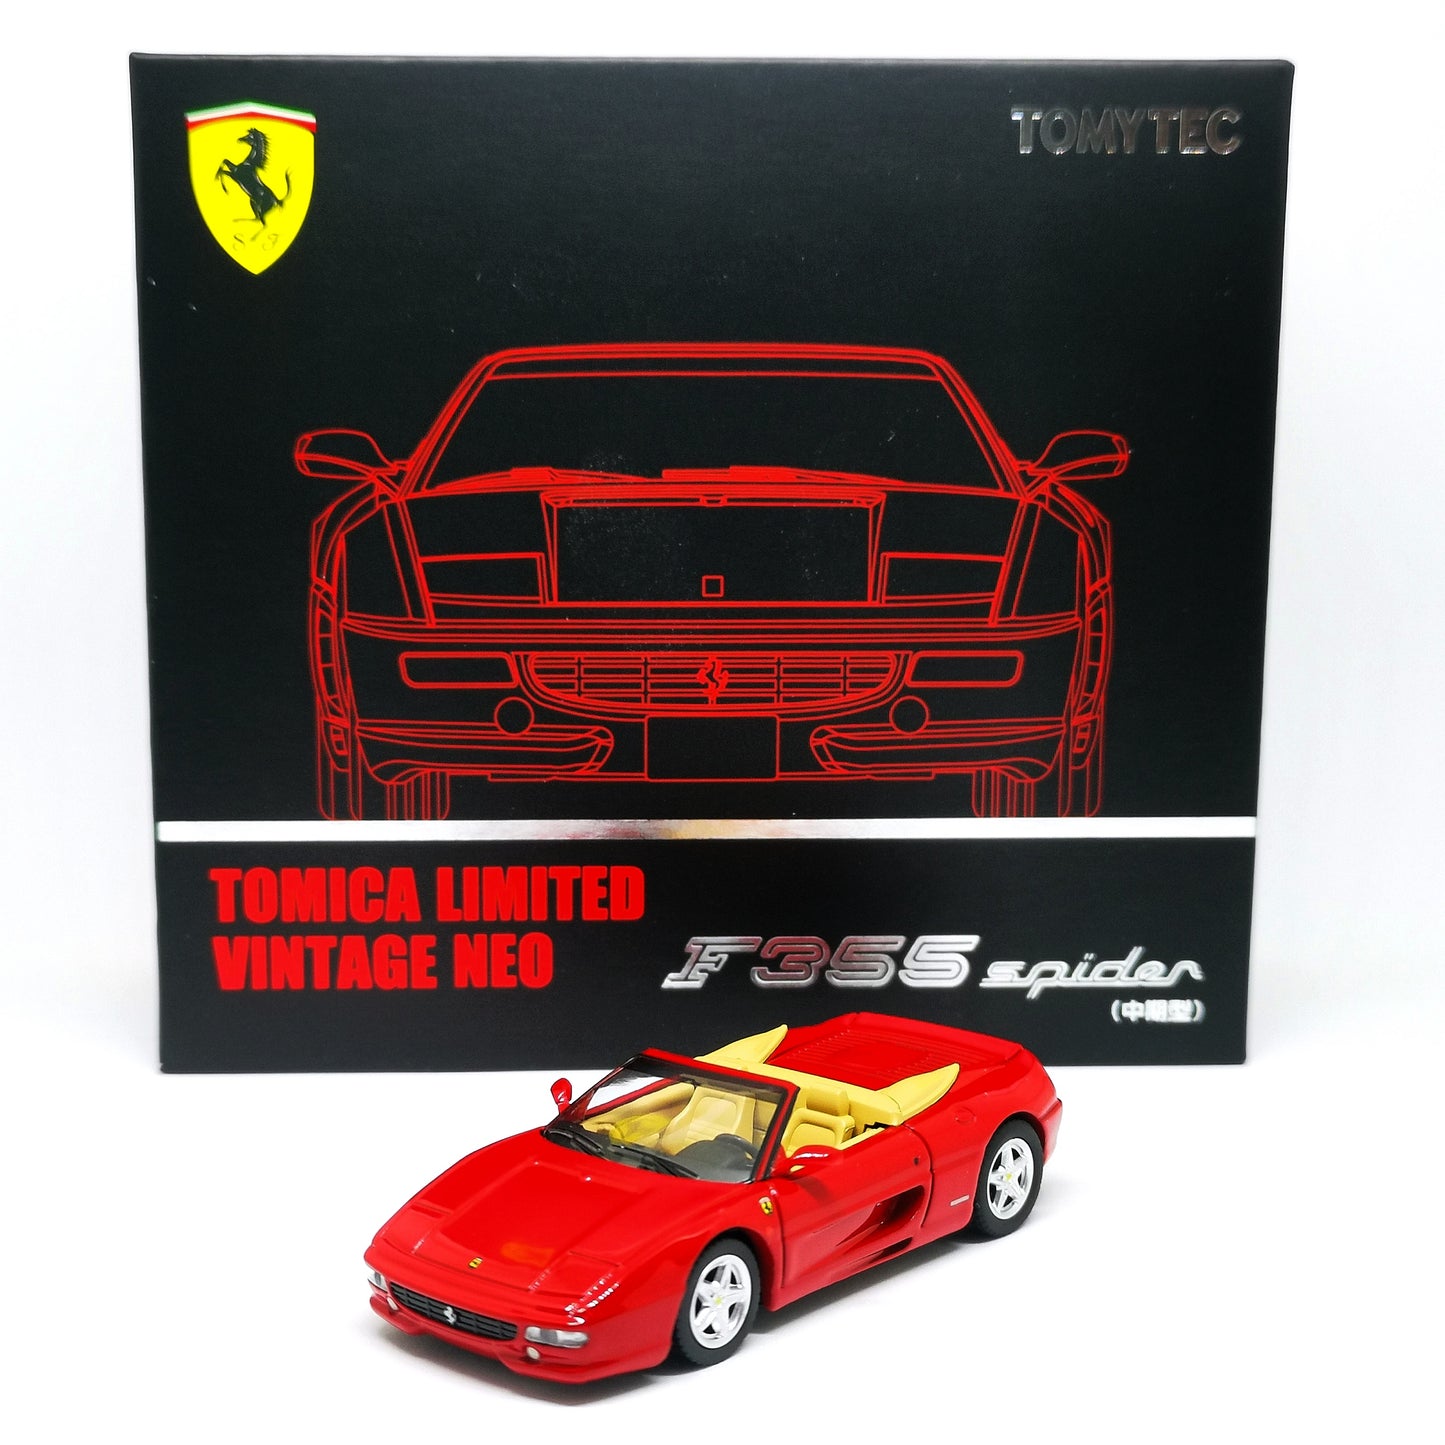 Tomica Limited Vintage Neo
Ferrari F355 Spider